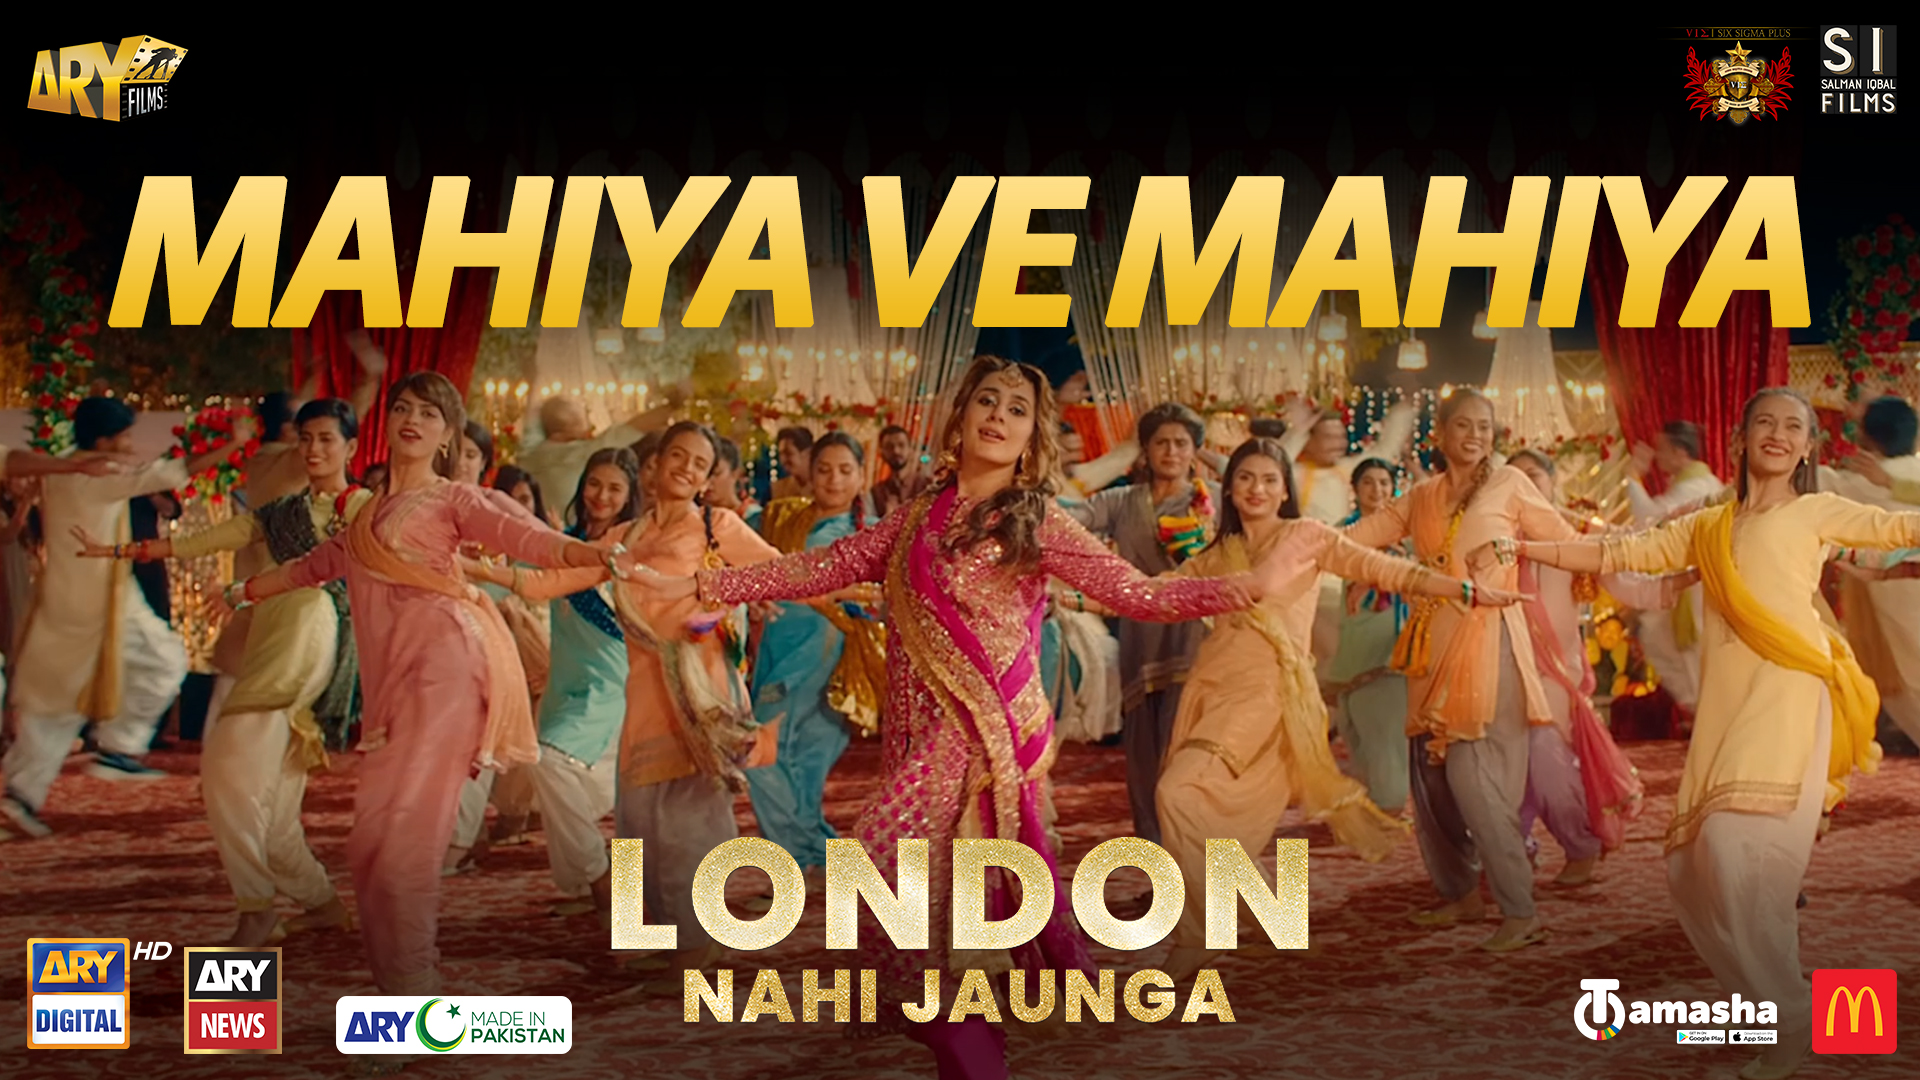 Here's why "Mahiya Ve Mahiya" from 'London Nahi Jaunga' will be played at every mehndi this wedding season!